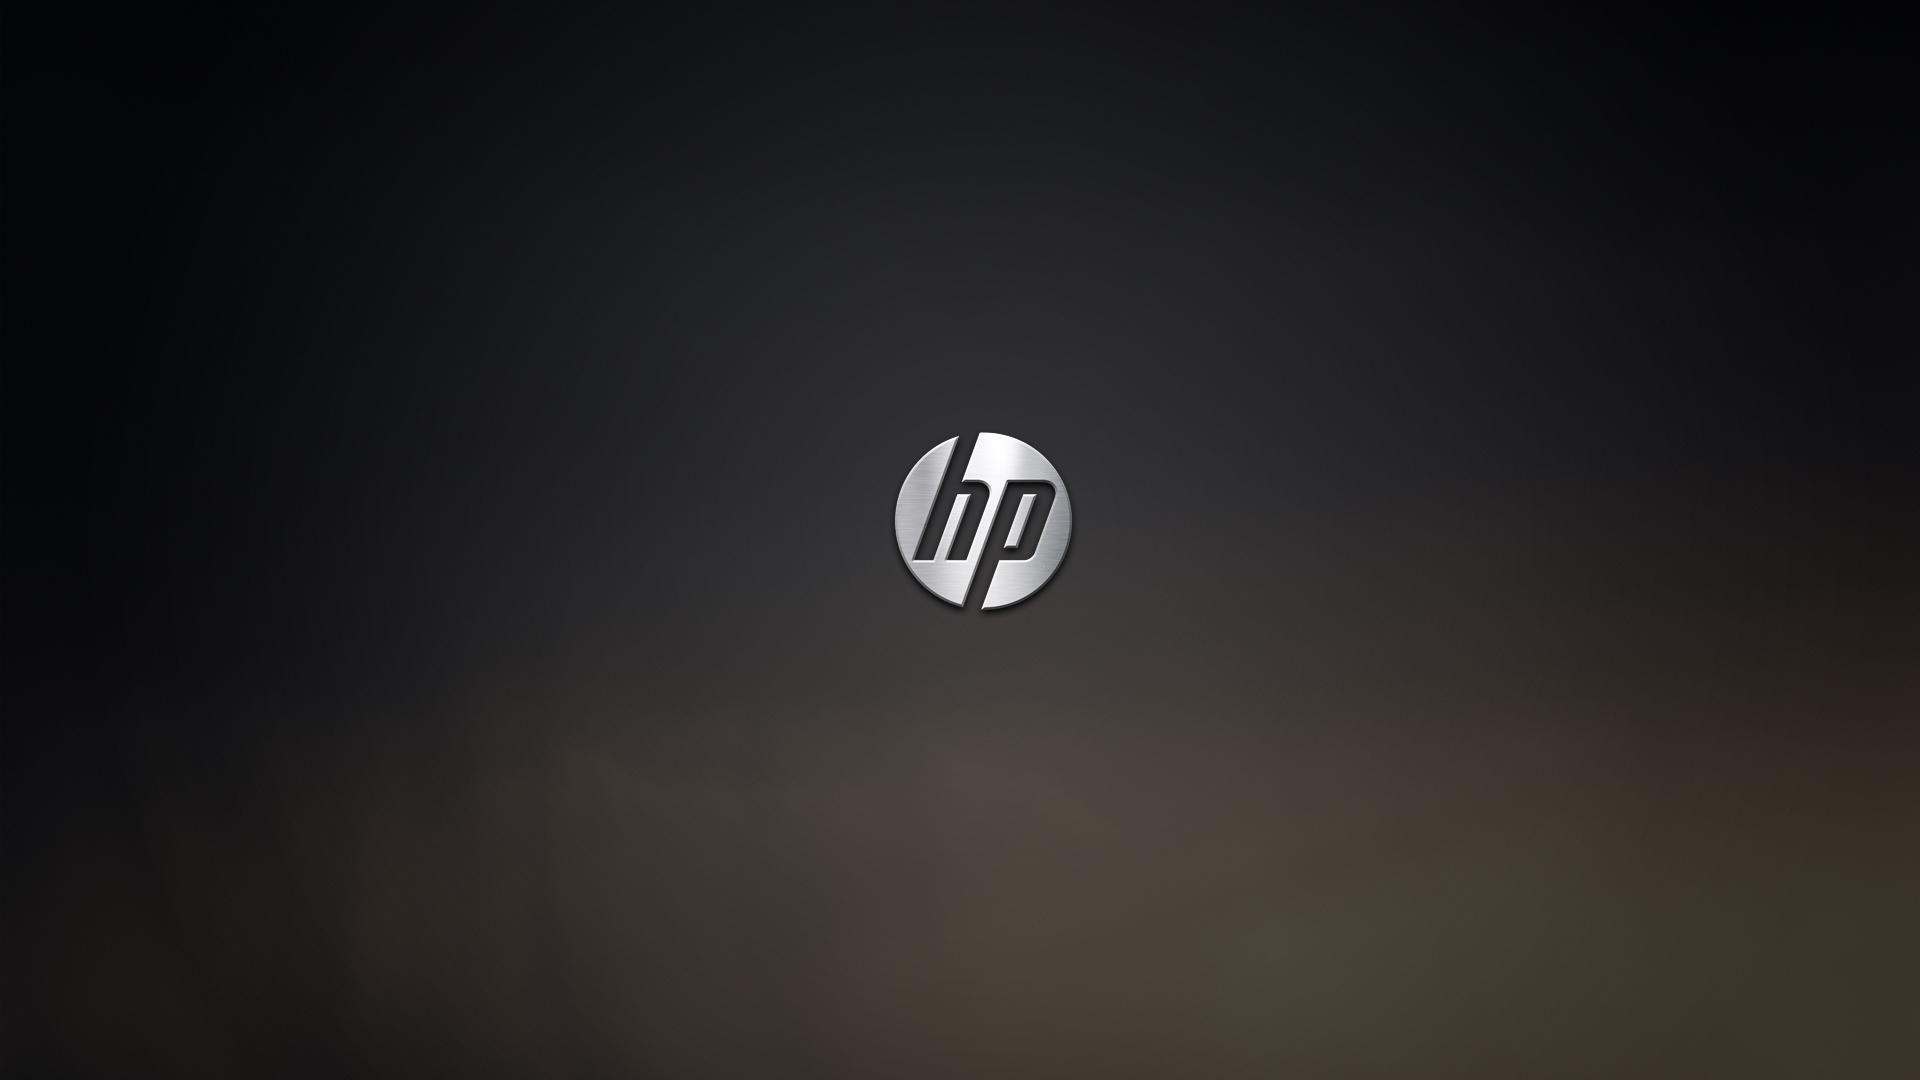 HP Logo Wallpapers - Top Free HP Logo